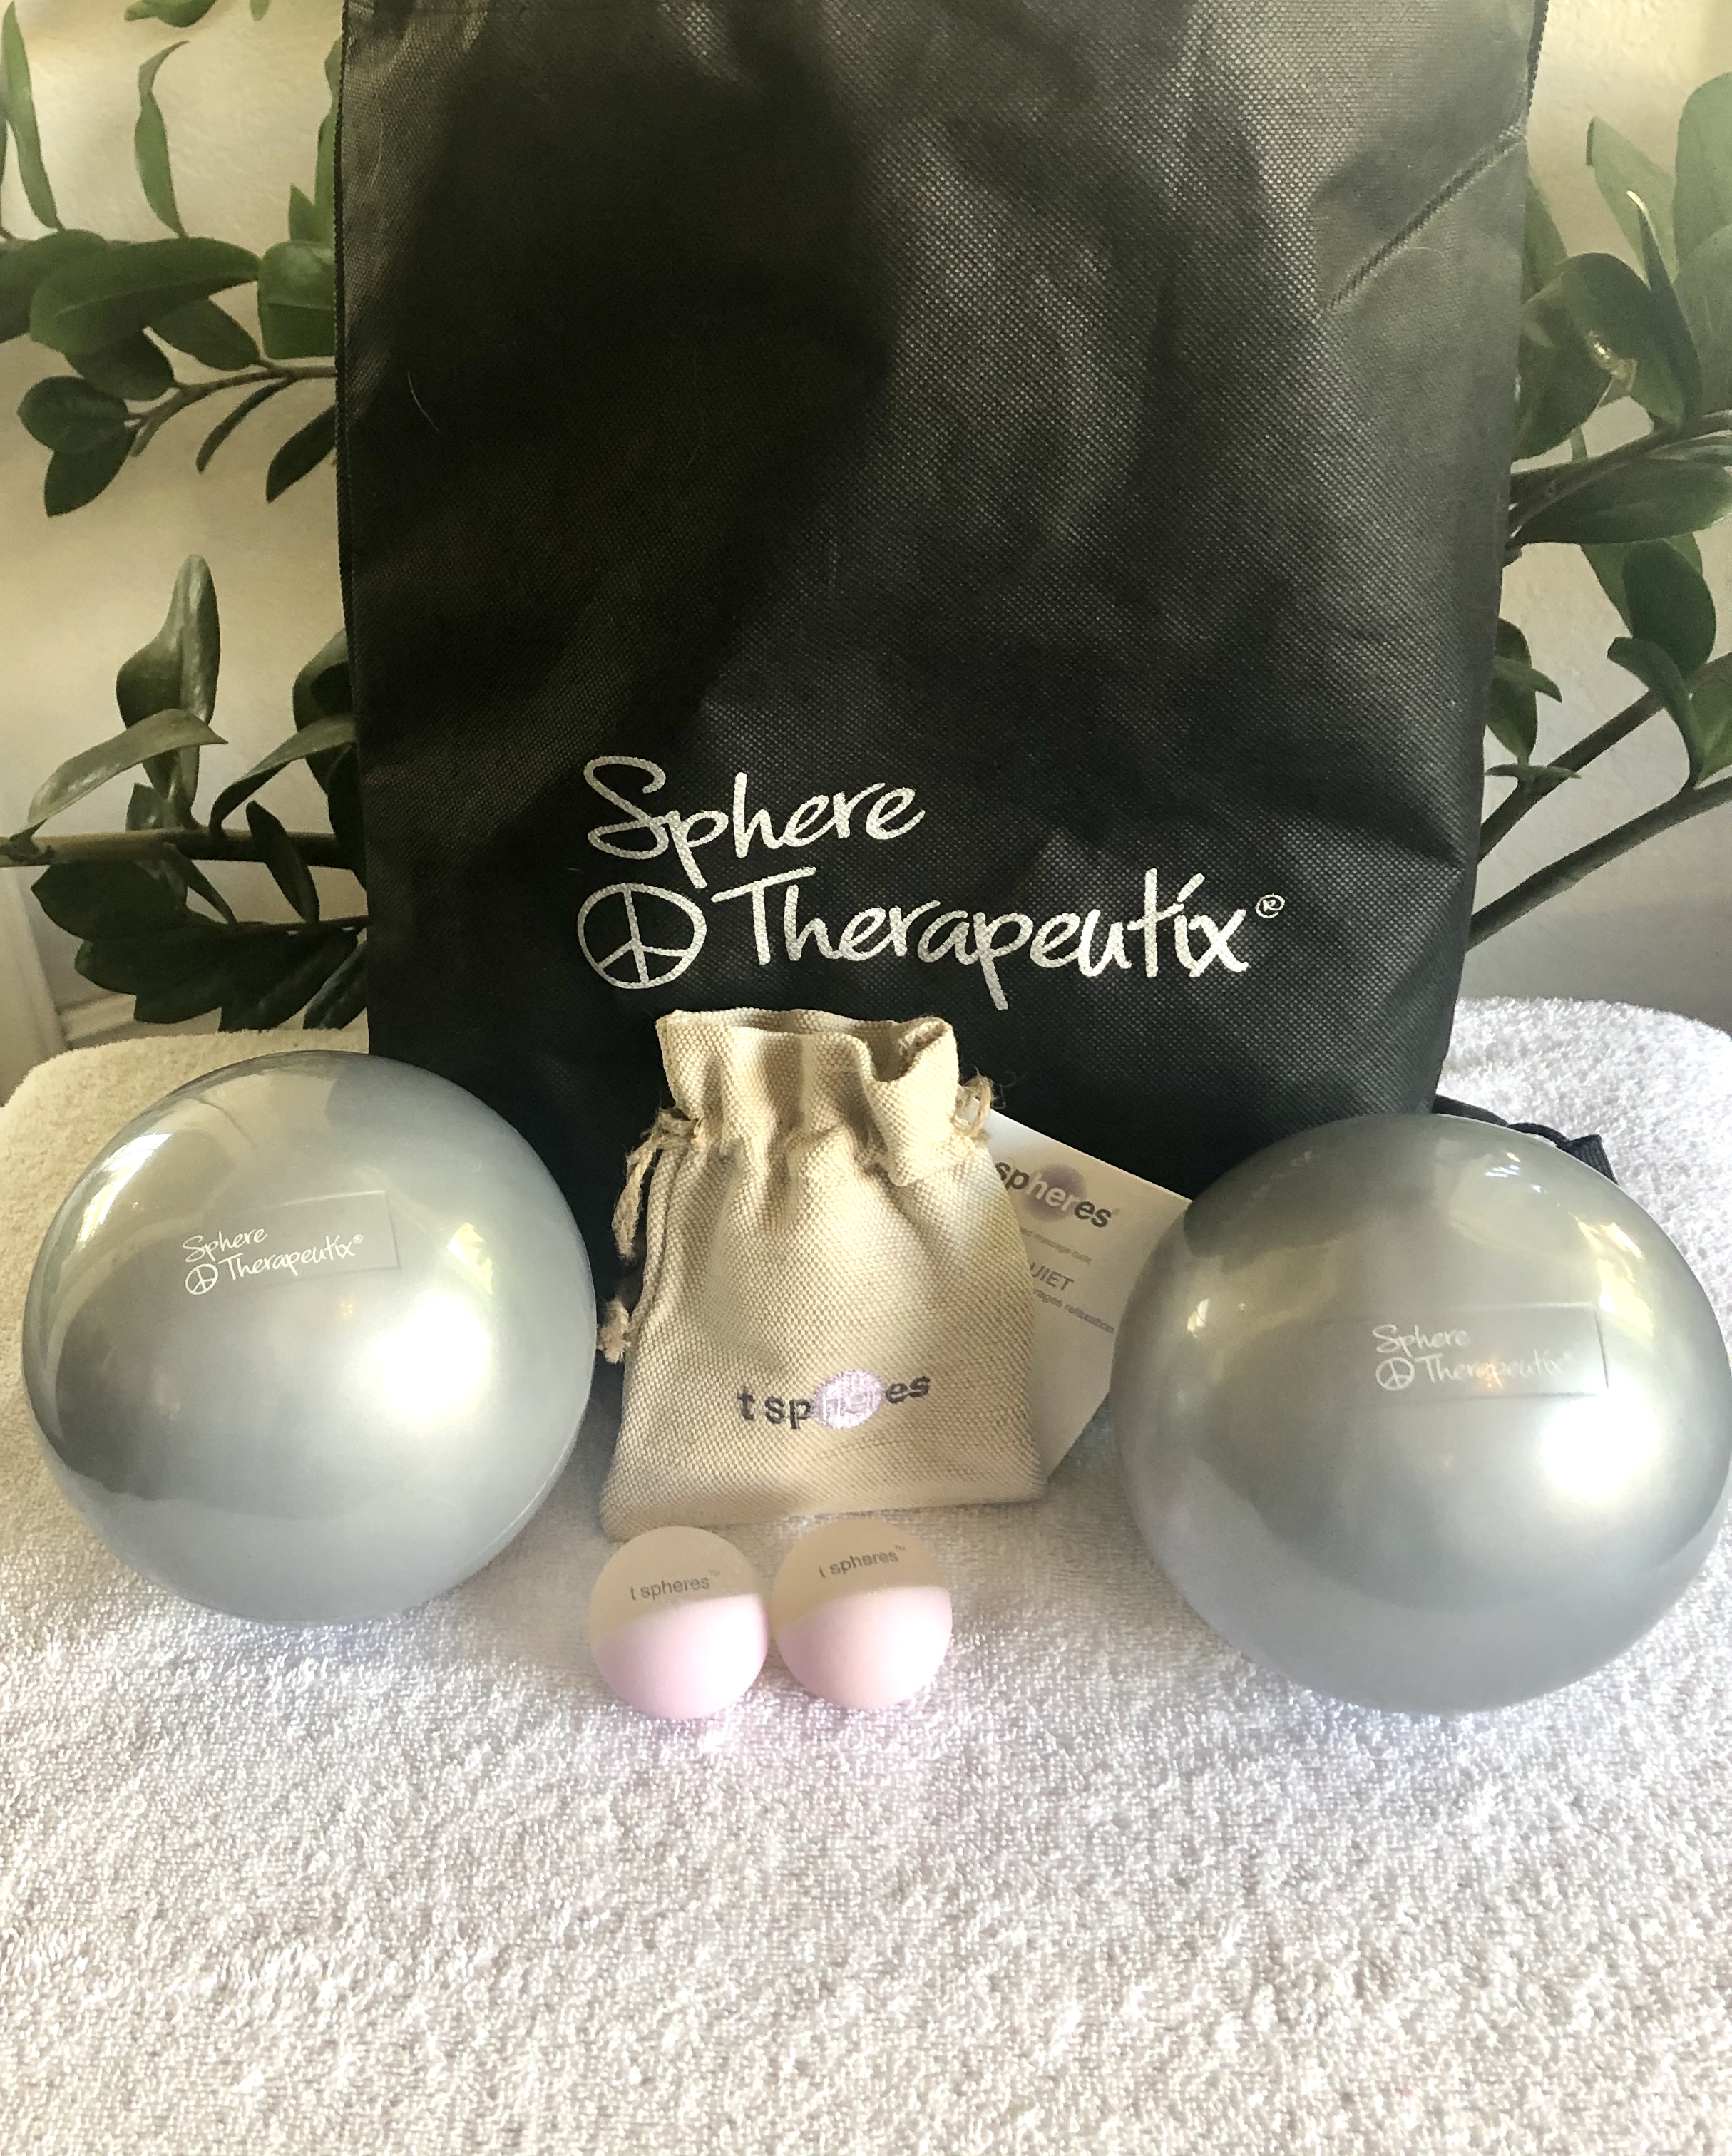 Sphere Therapeutix Bodywork Stress and Tension Resolver Kit